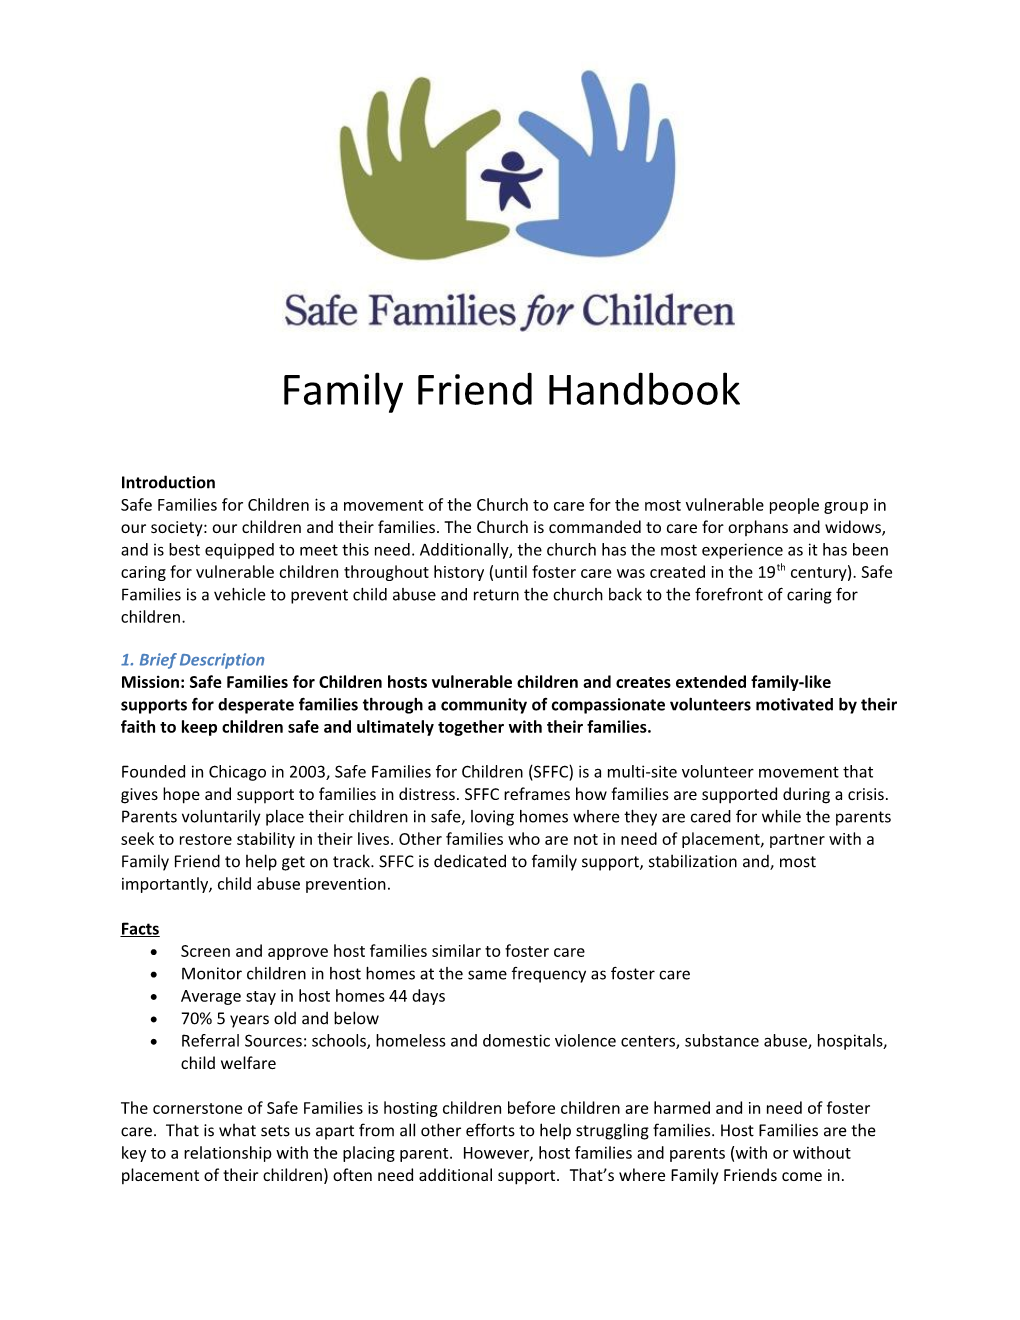 Family Friend Handbook